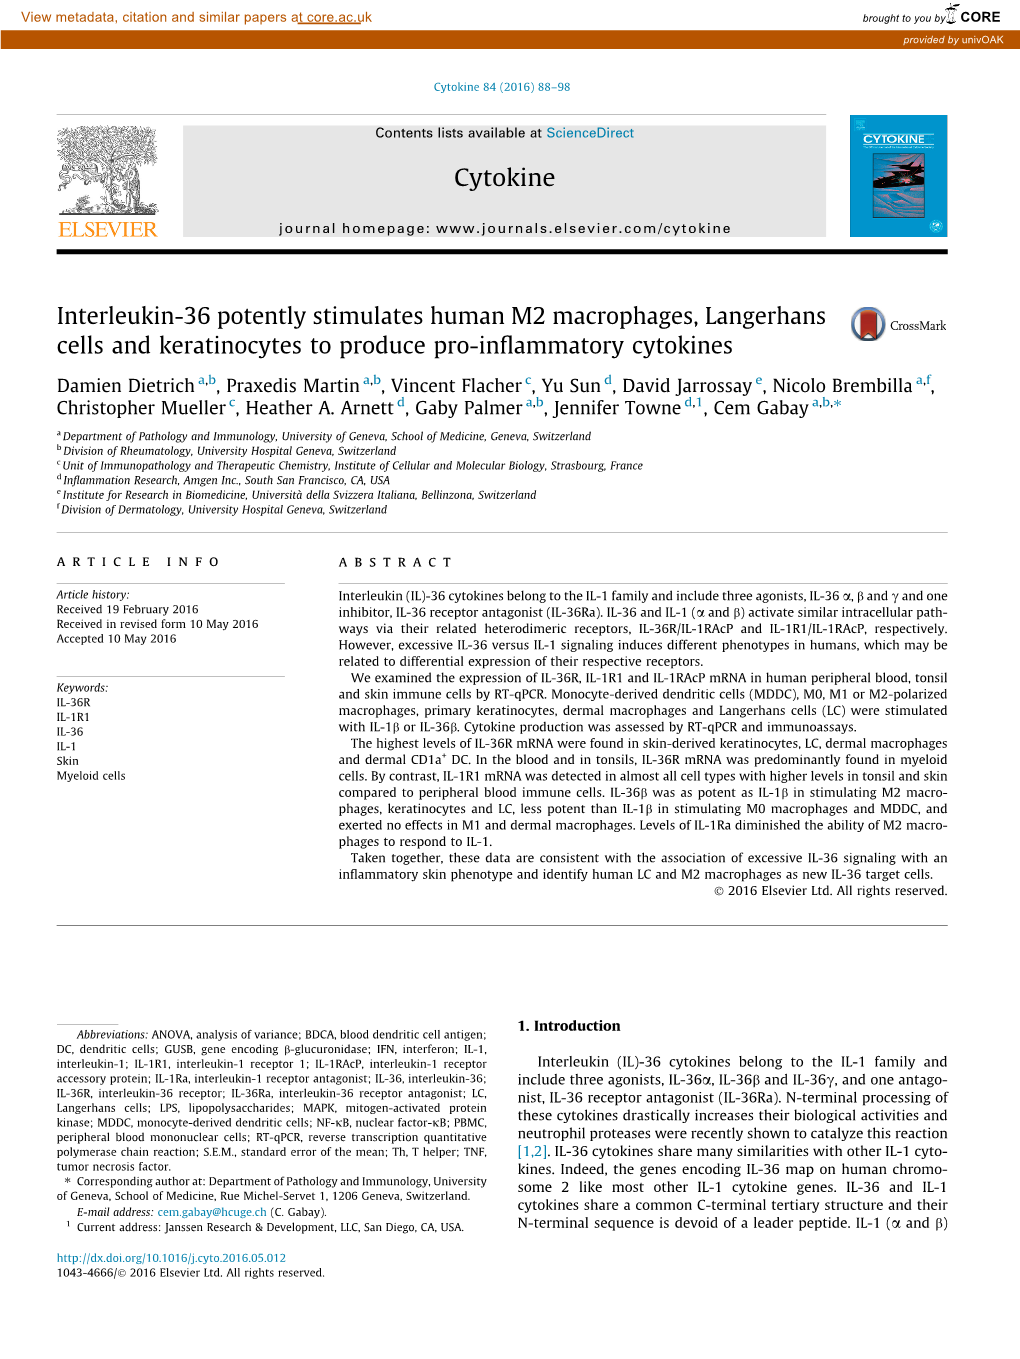 Interleukin-36 Potently Stimulates Human M2 Macrophages, Langerhans Cells and Keratinocytes to Produce Pro-Inﬂammatory Cytokines